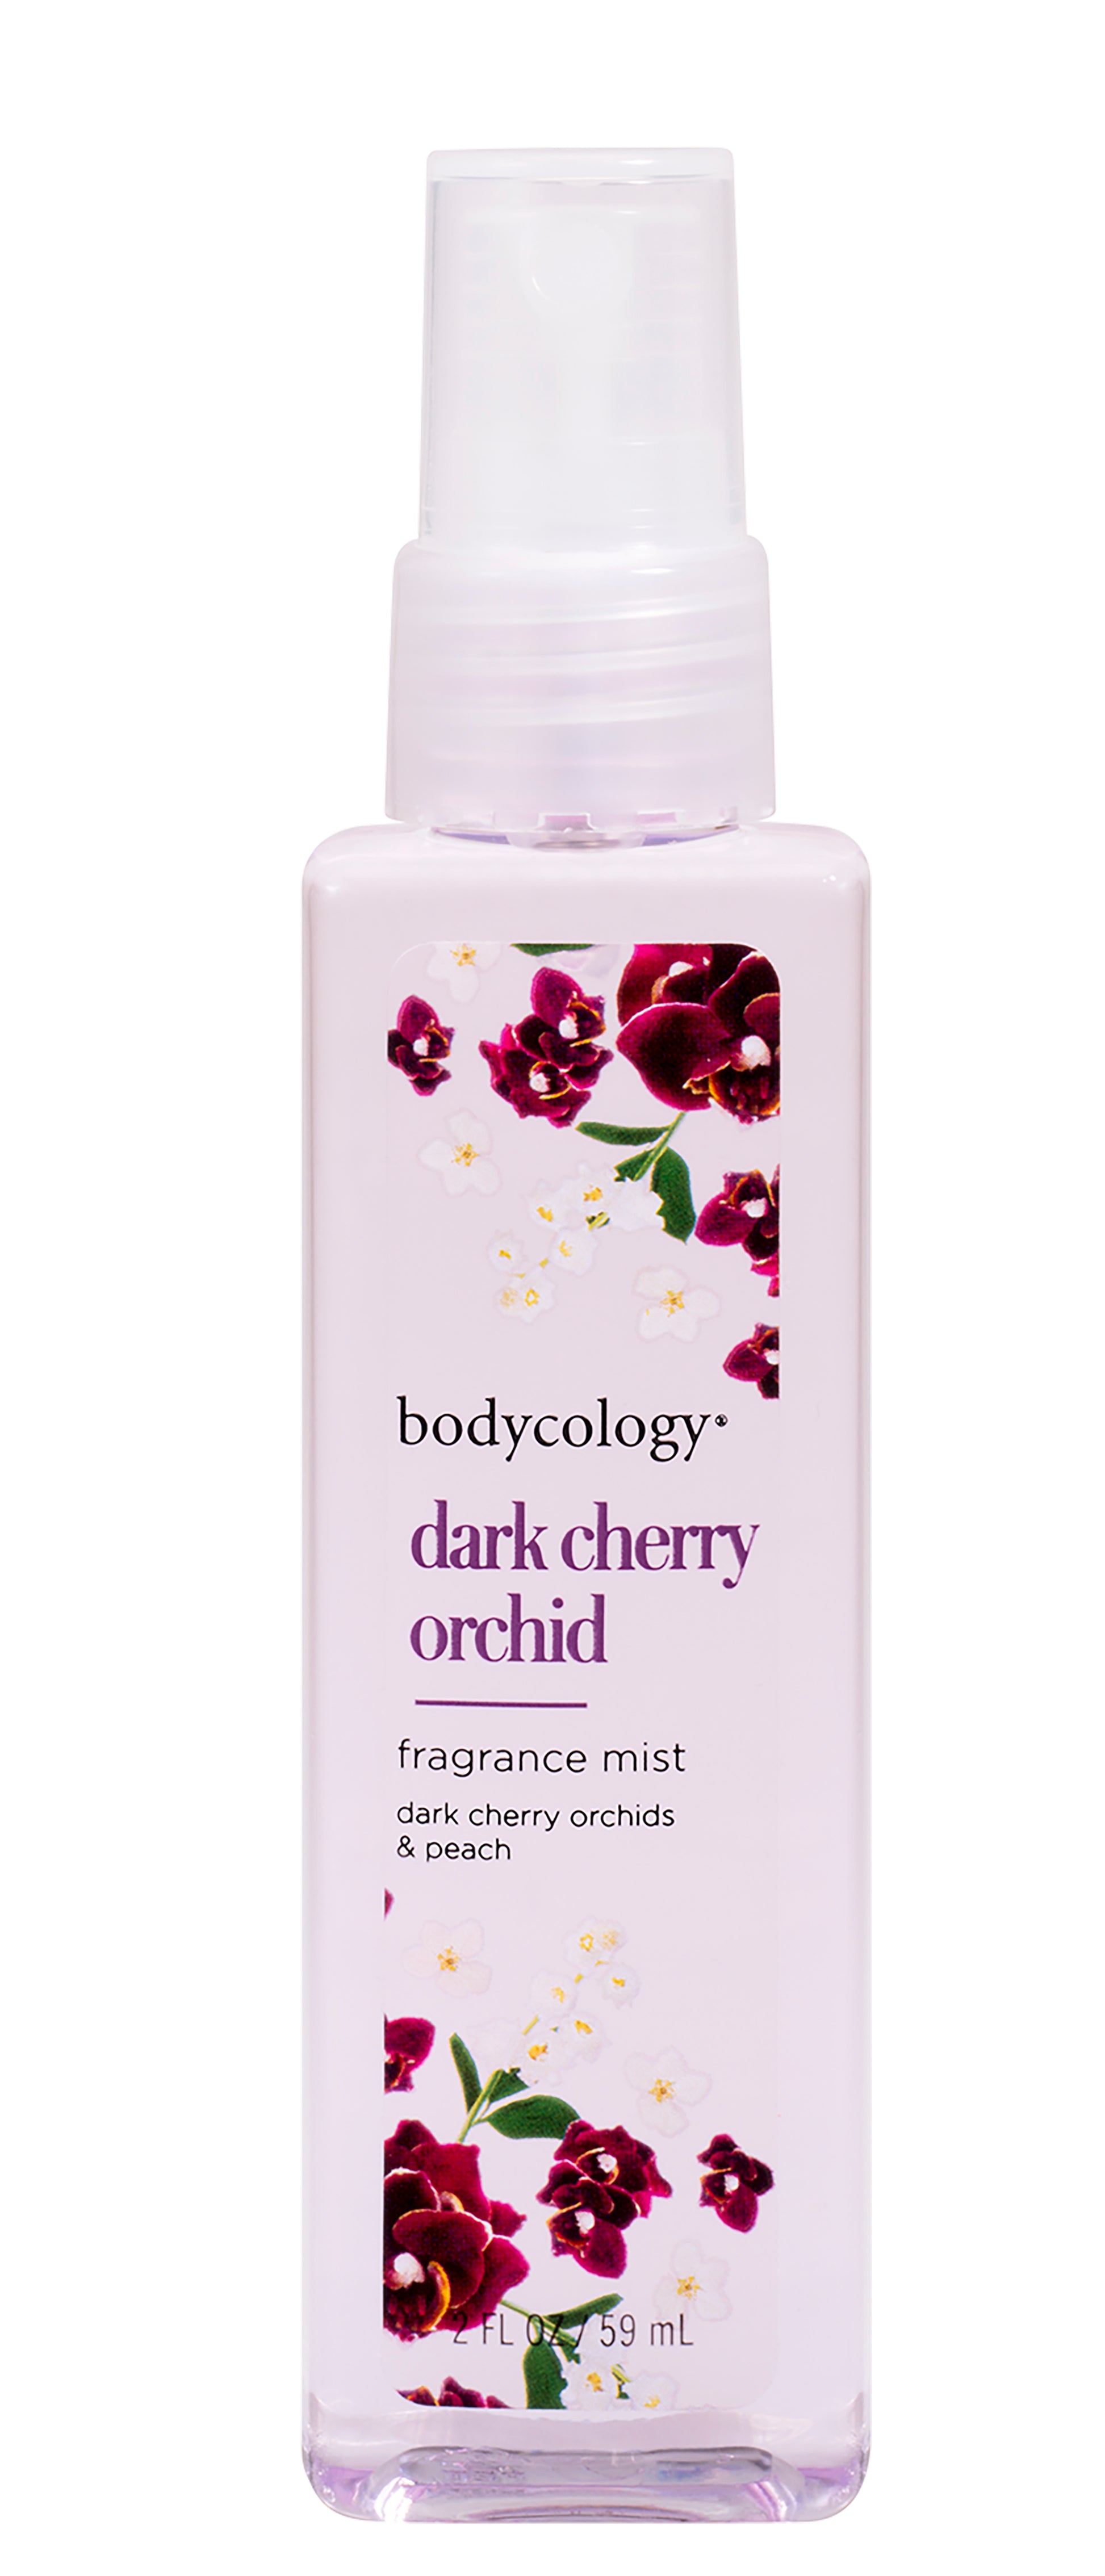 Bodycology Fragrance Mist 2 oz Spray Dark Cherry Orchid